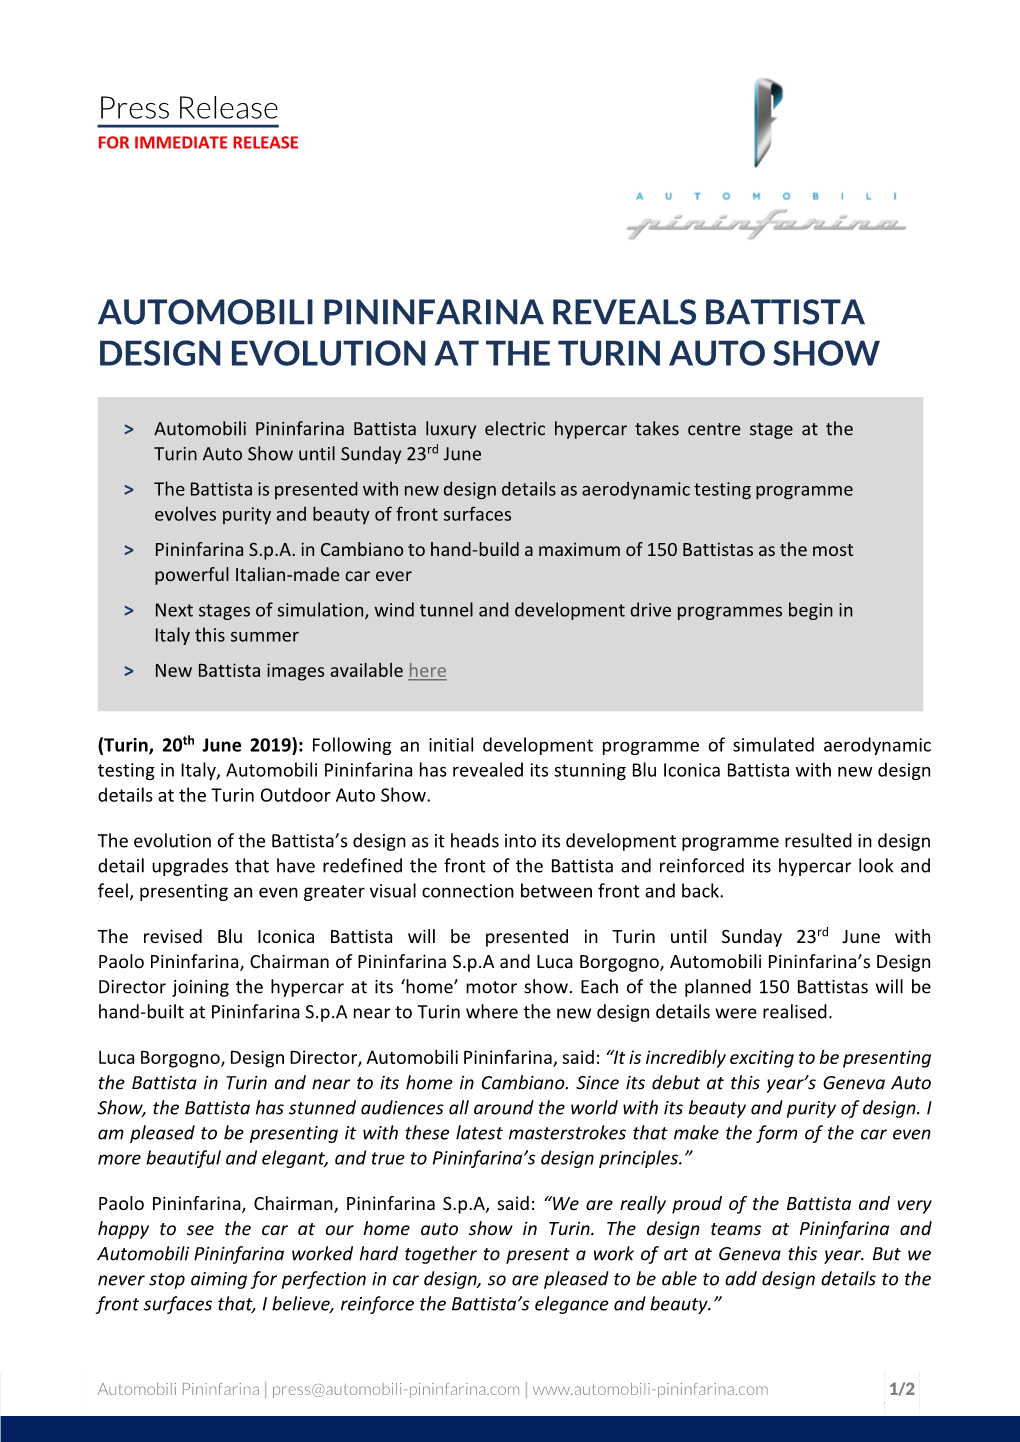 Automobili Pininfarina Reveals Battista Design Evolution at the Turin Auto Show